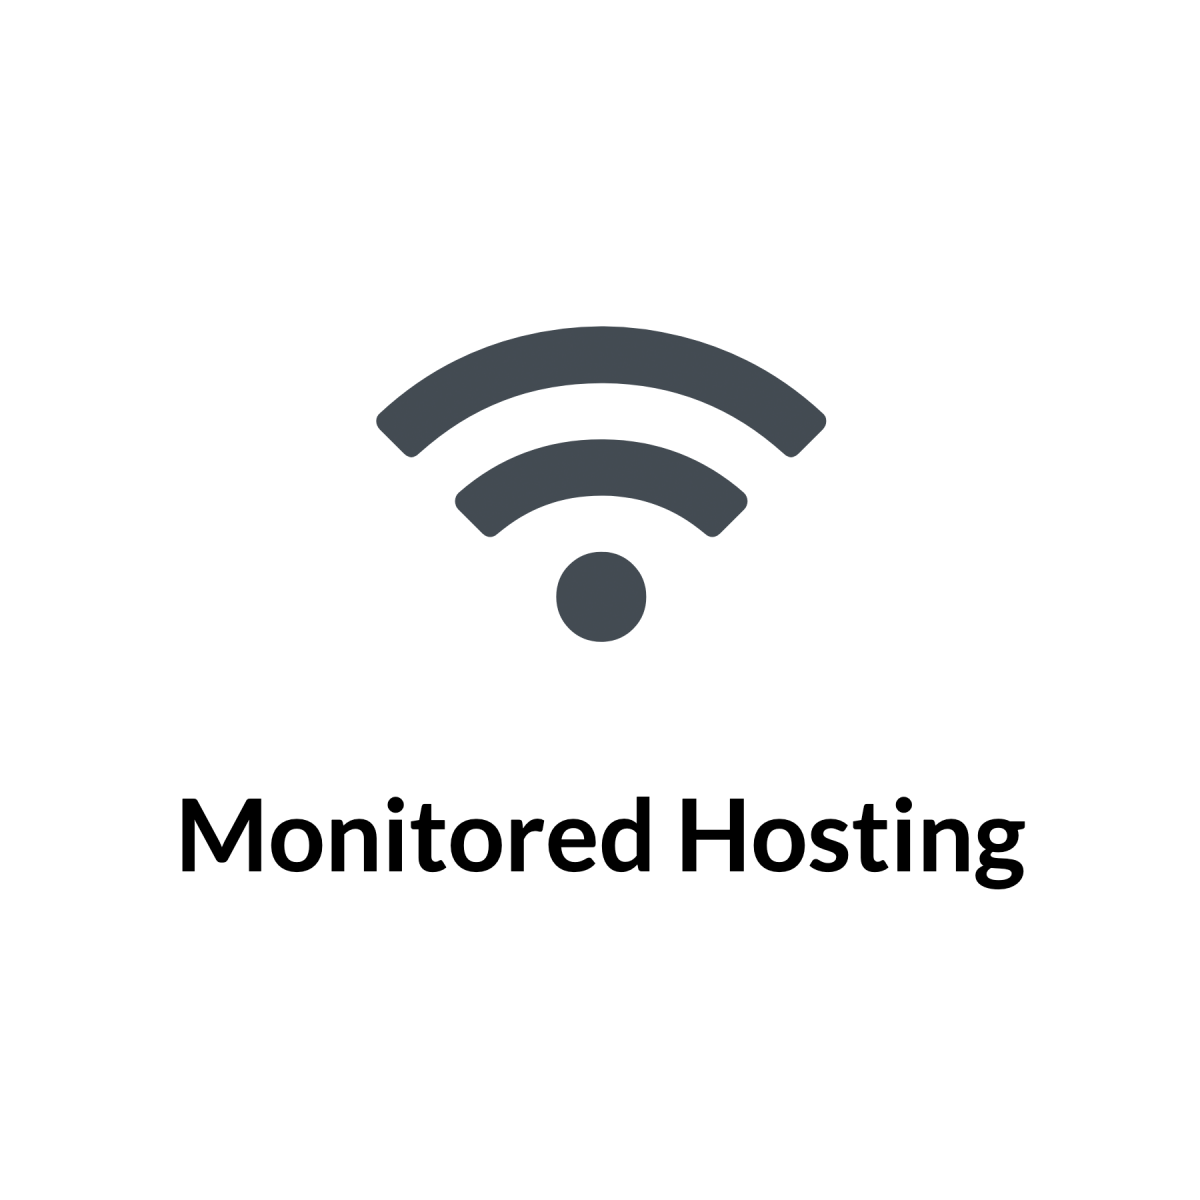 Monitored Hosting